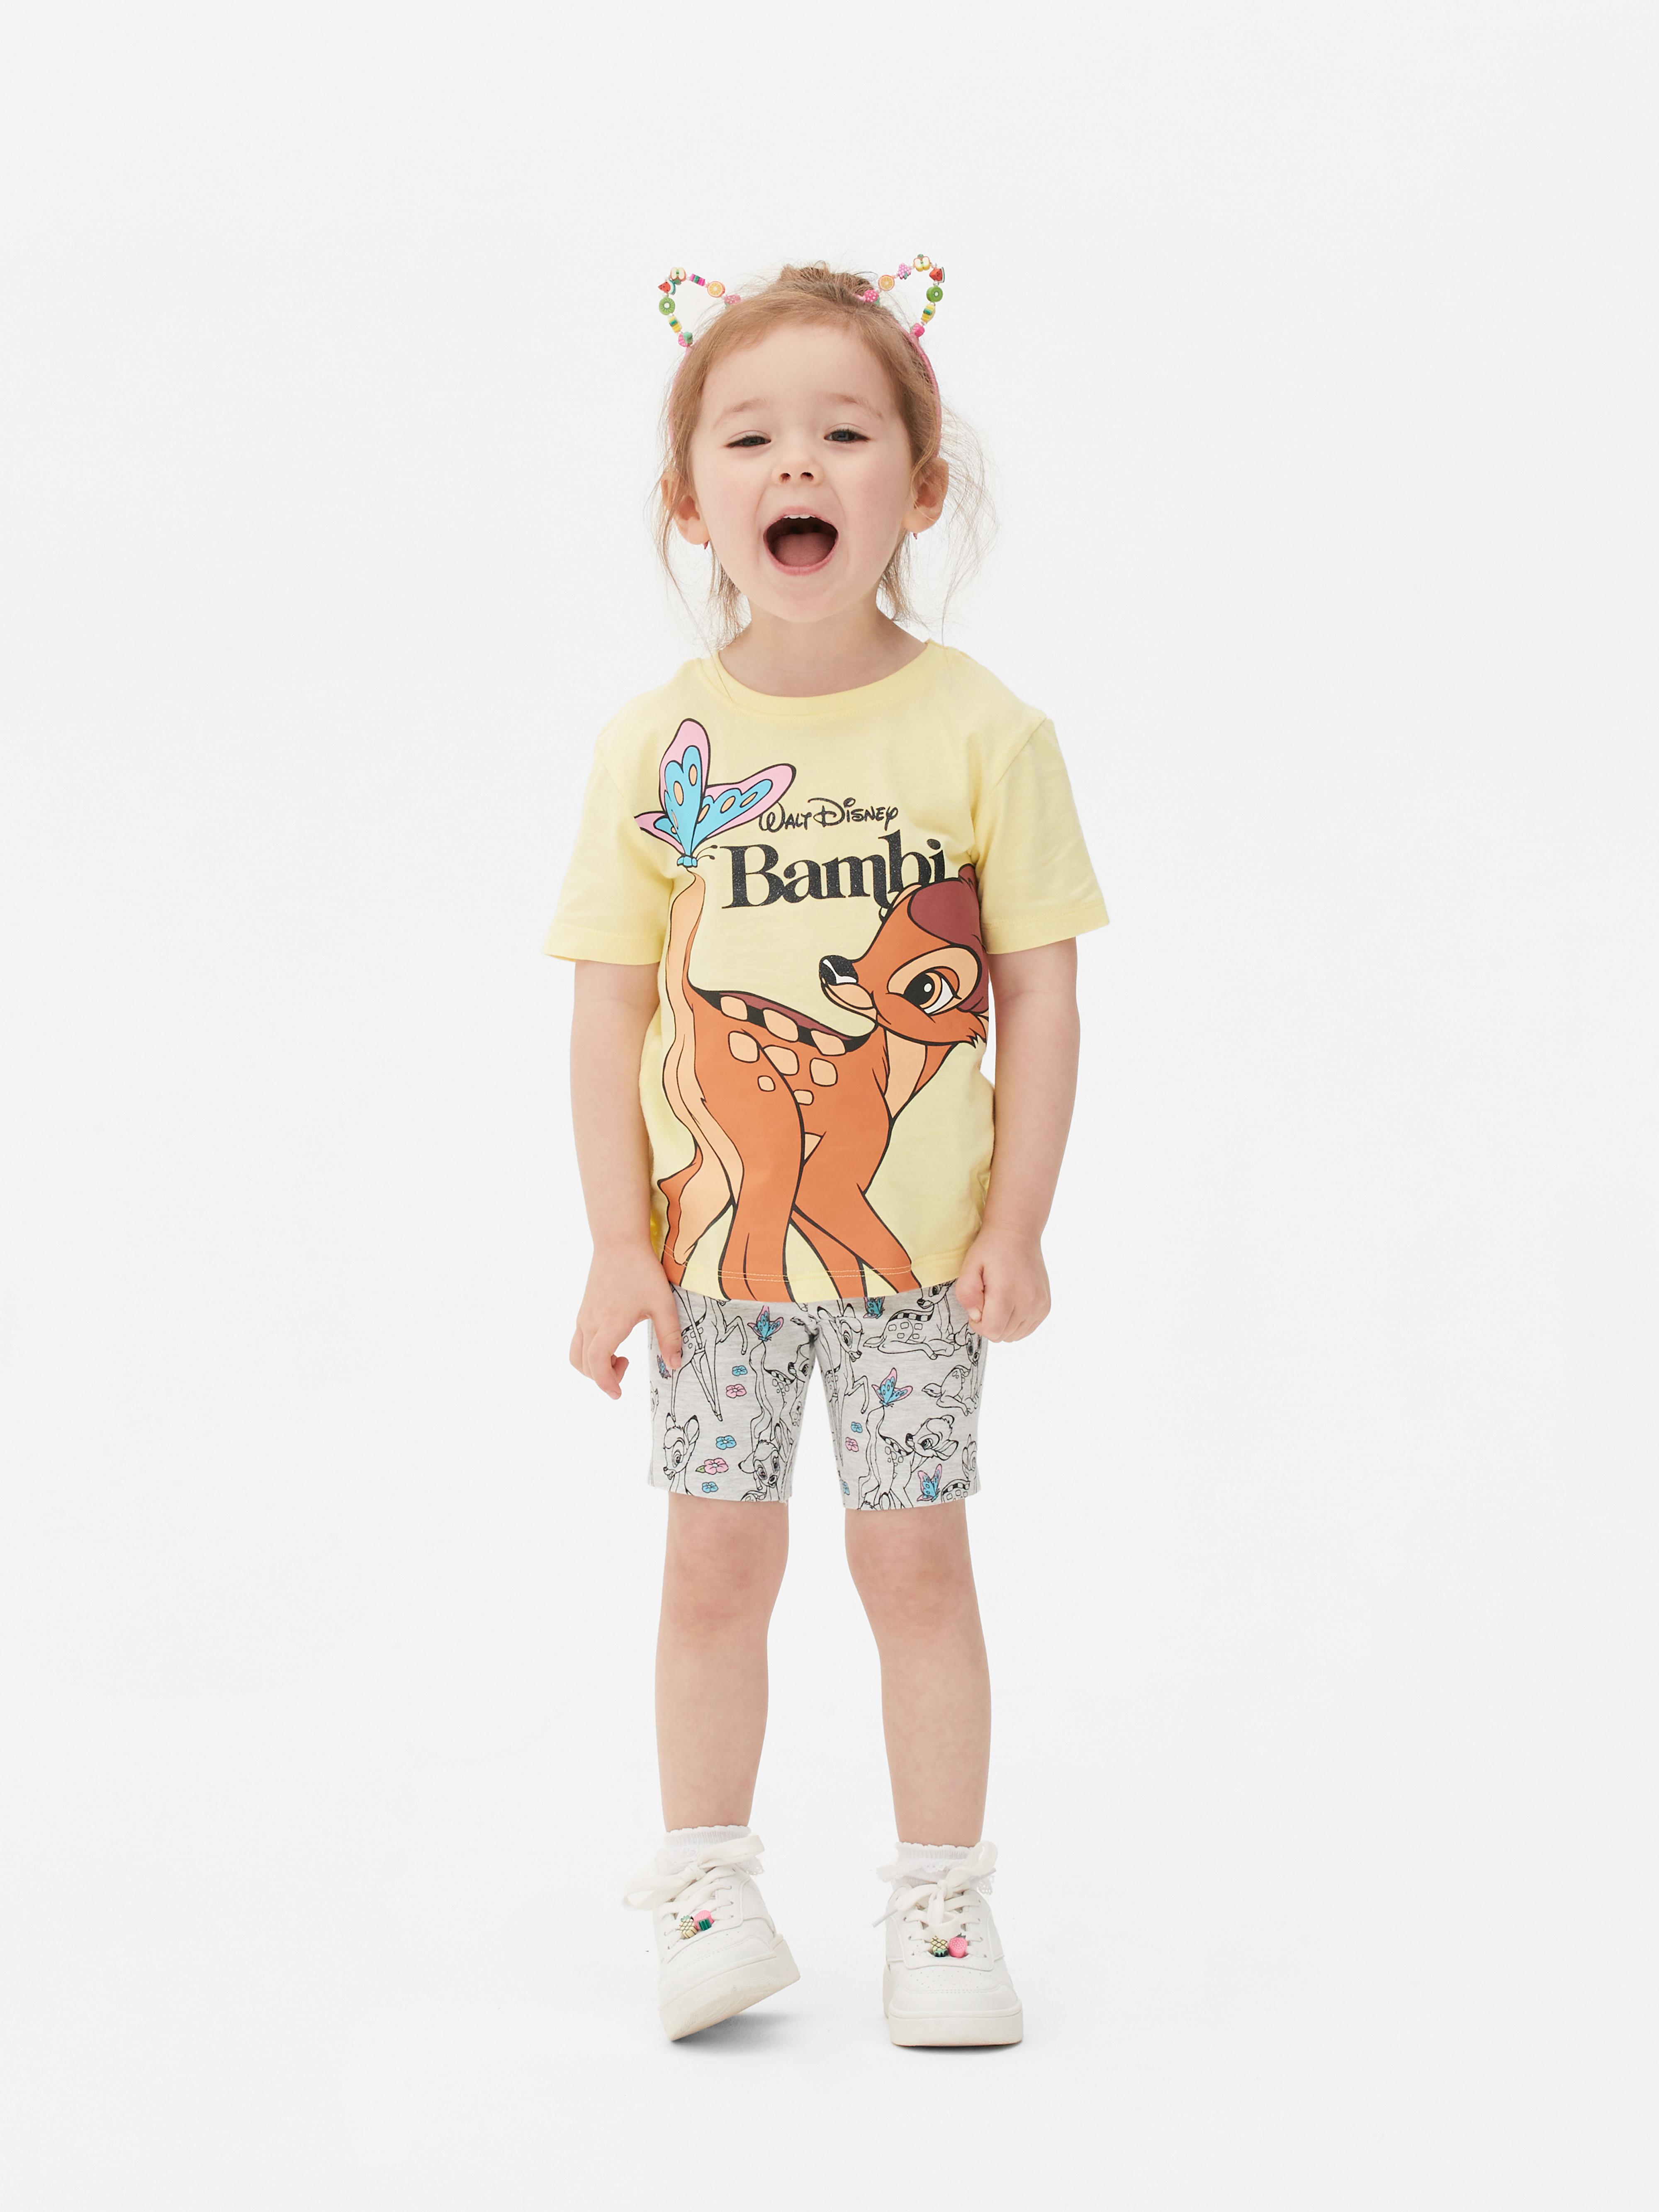 Disney’s Bambi T-shirt and Shorts Co-ord Set